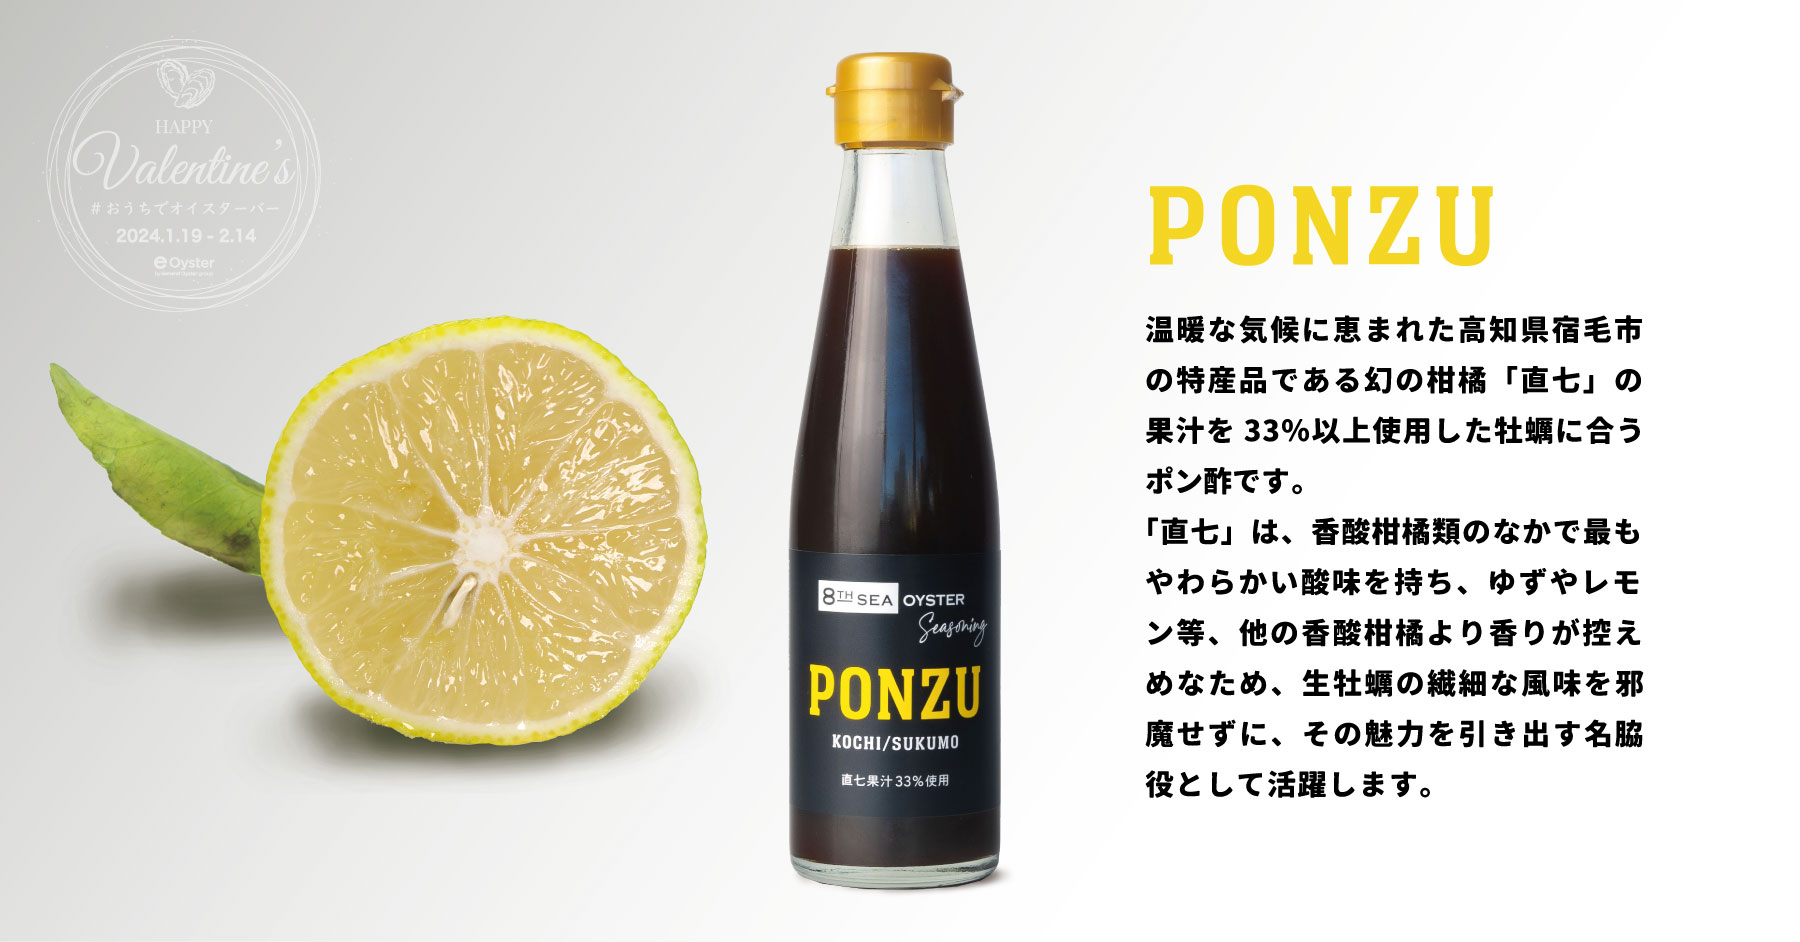 「PONZU」1本プレゼント